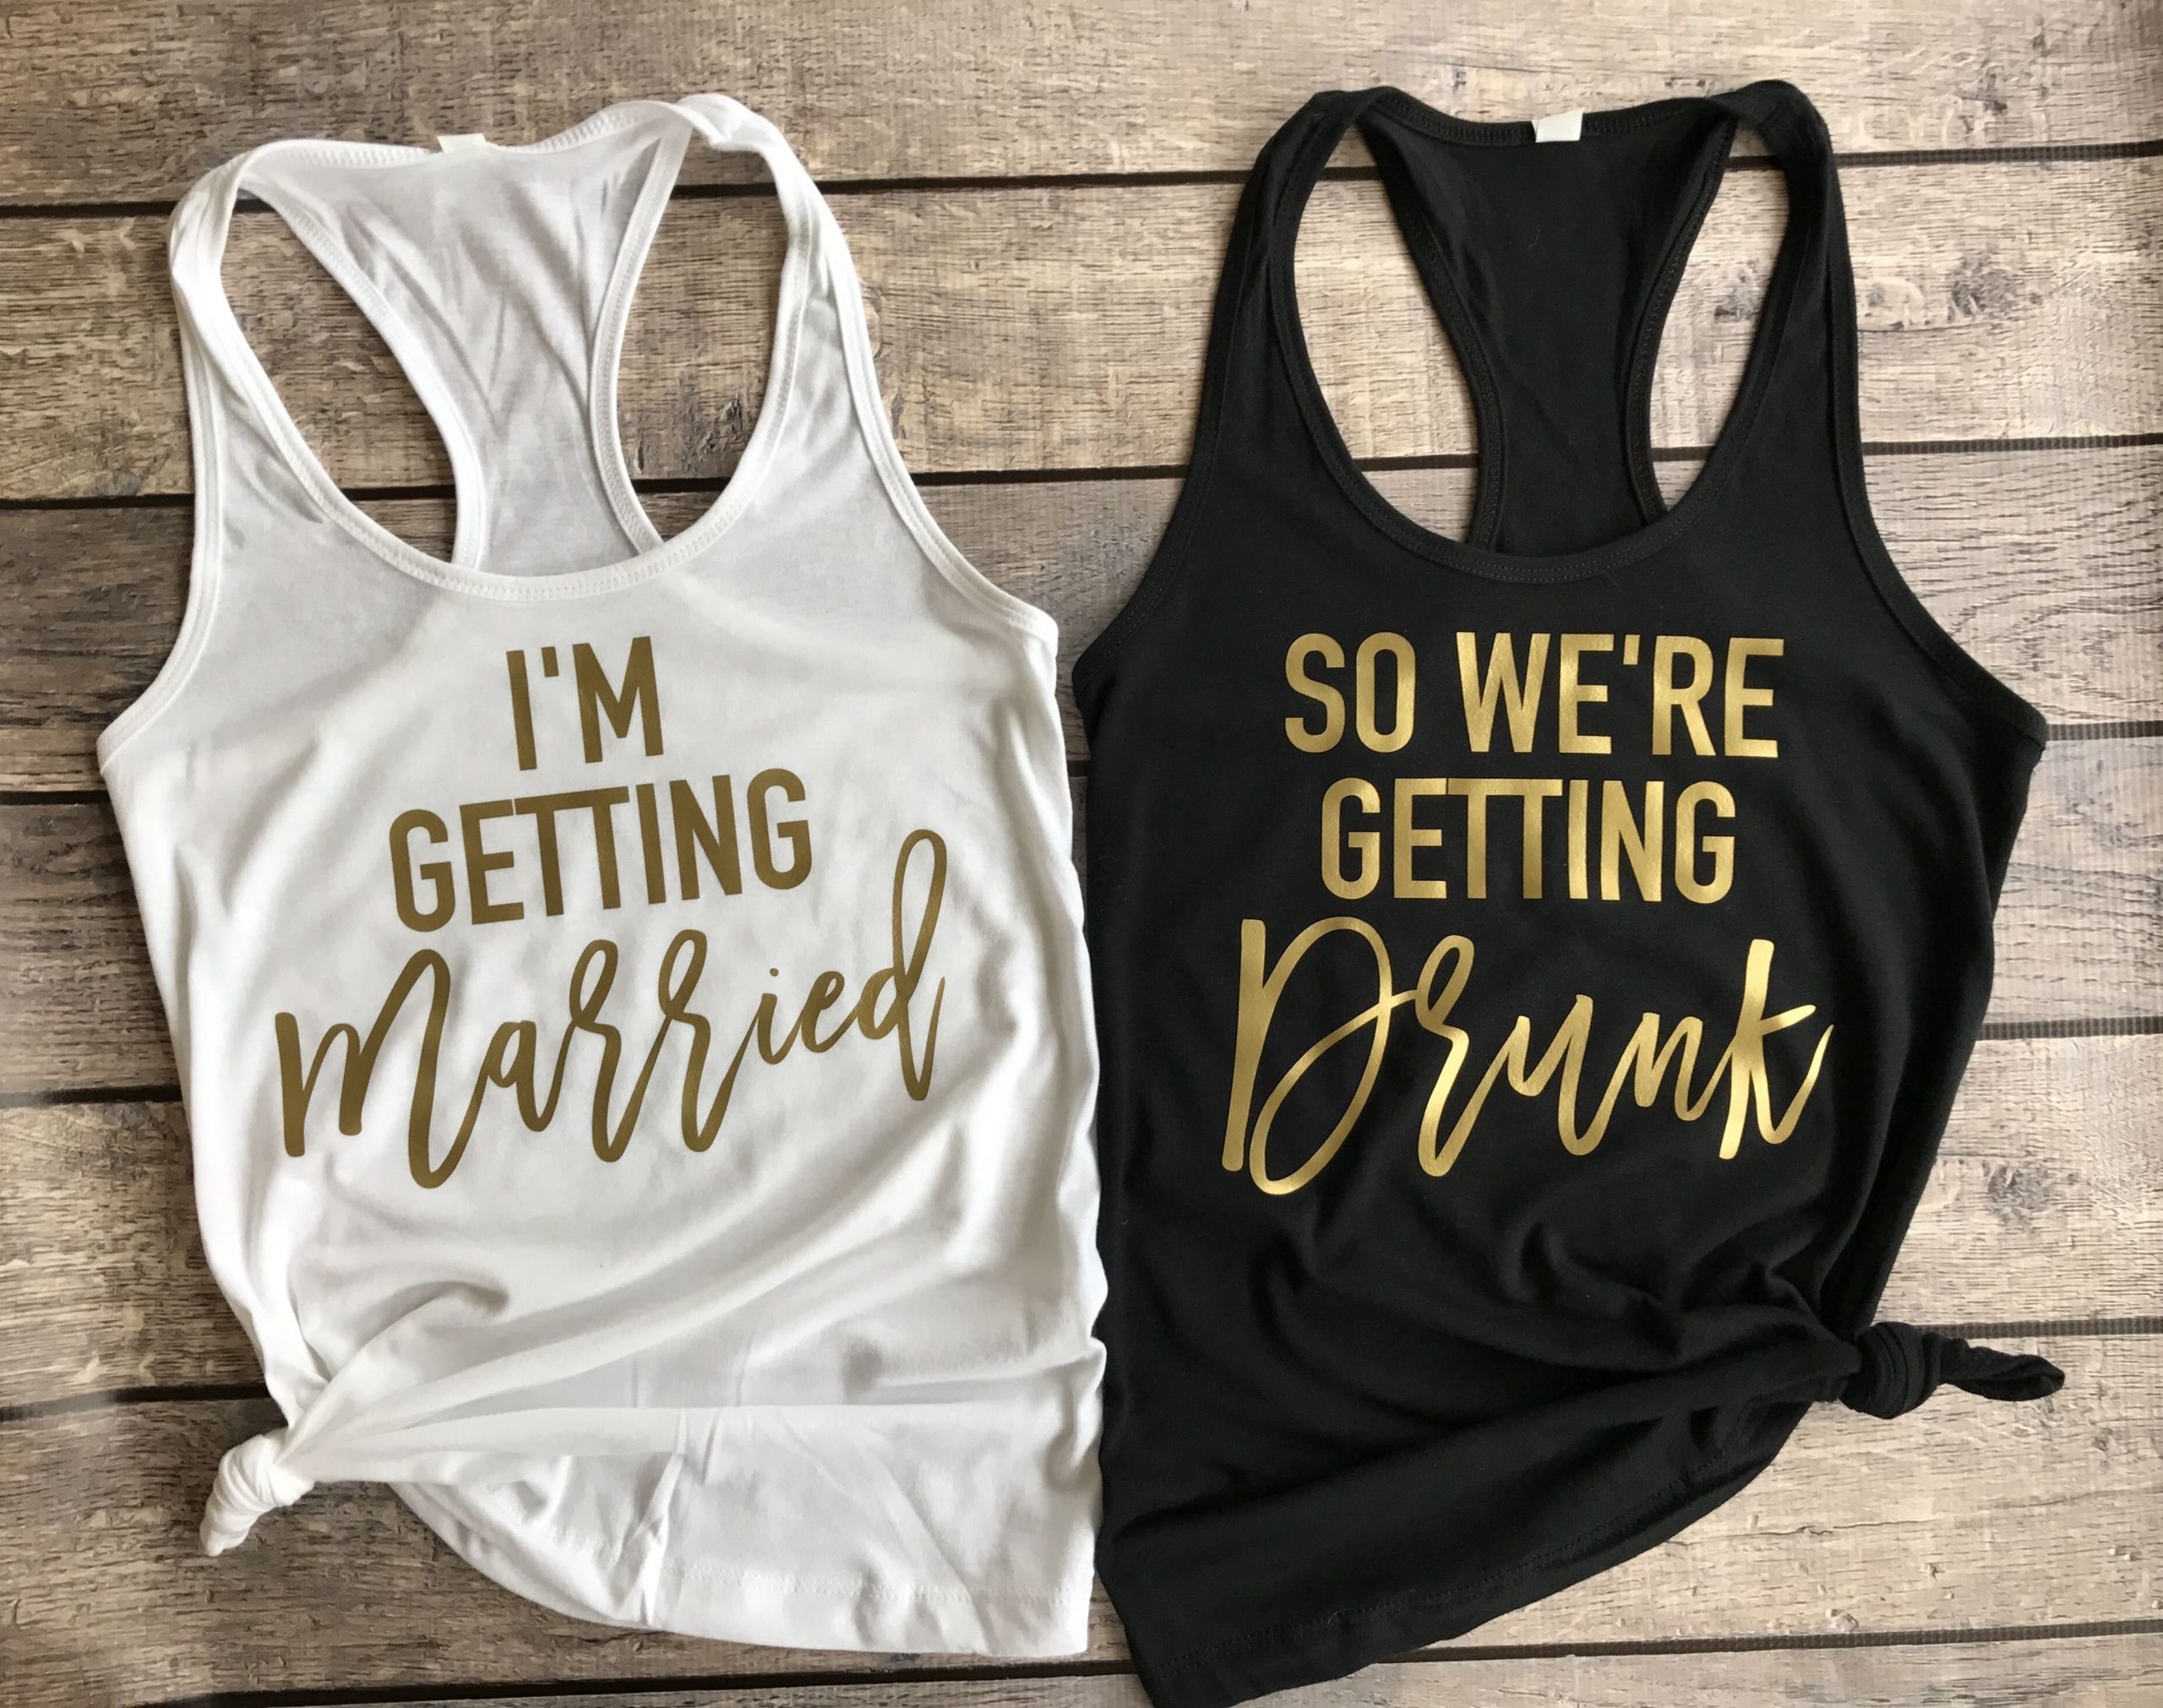 Bachelorette Party Shirts Ideas
 10 Attractive Bachelorette Party T Shirt Ideas 2019